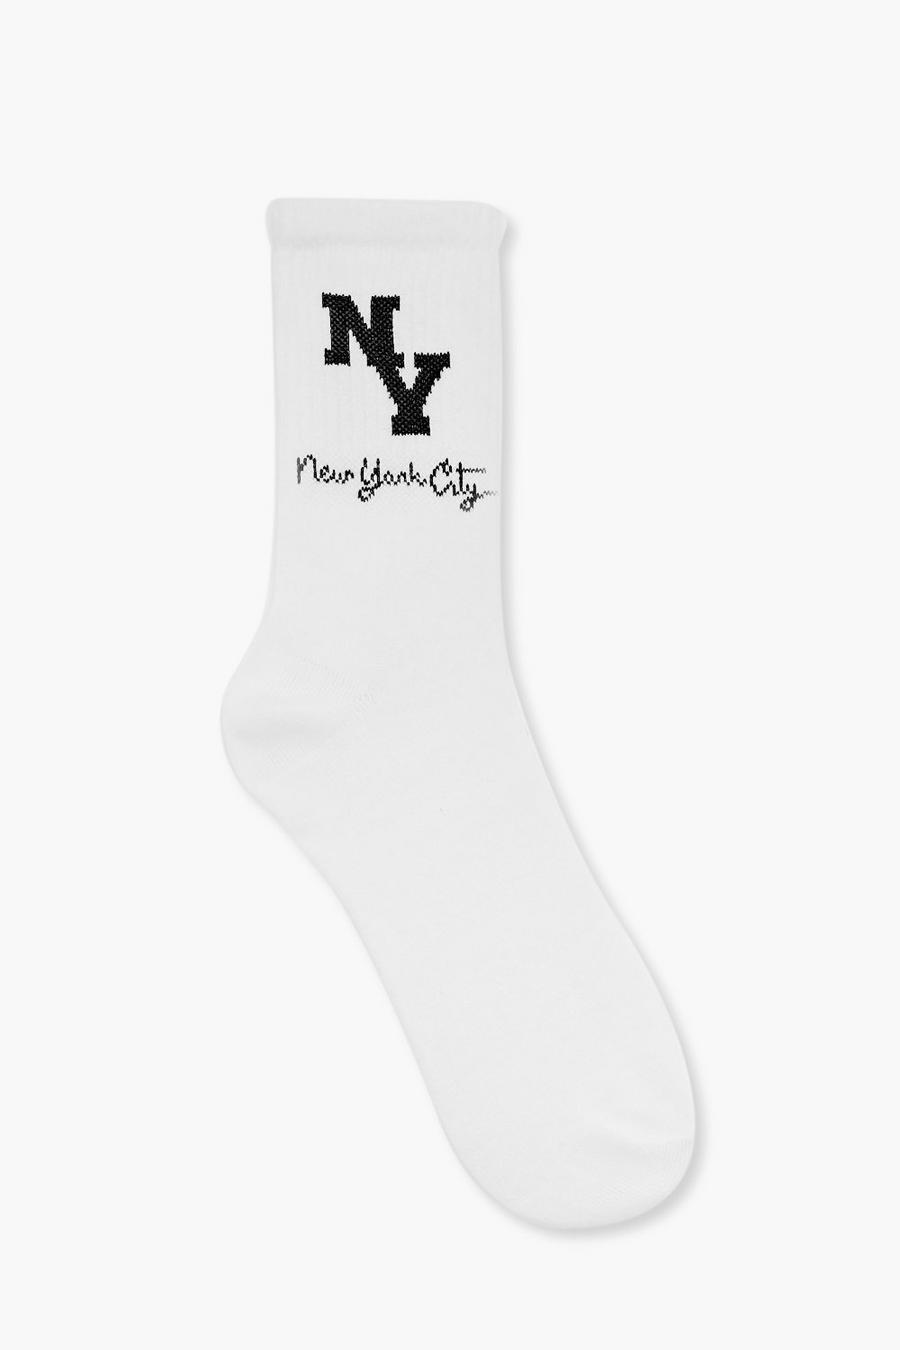 Socken mit Ny City Slogan, White weiß